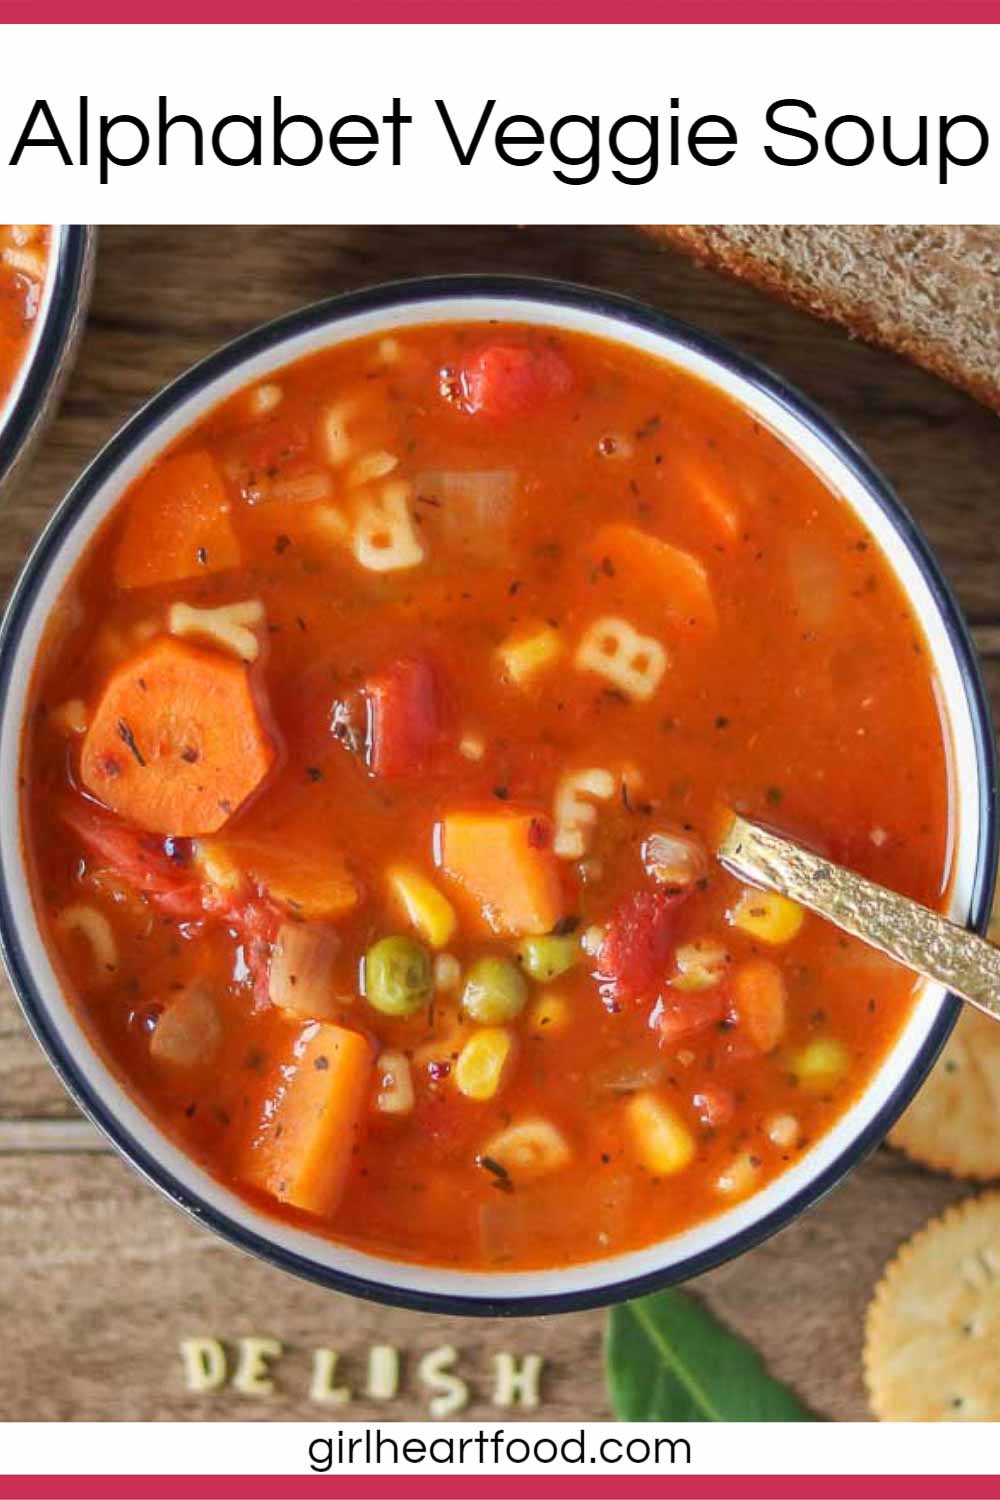 Vegetable Alphabet Soup Recipe | Girl Heart Food®